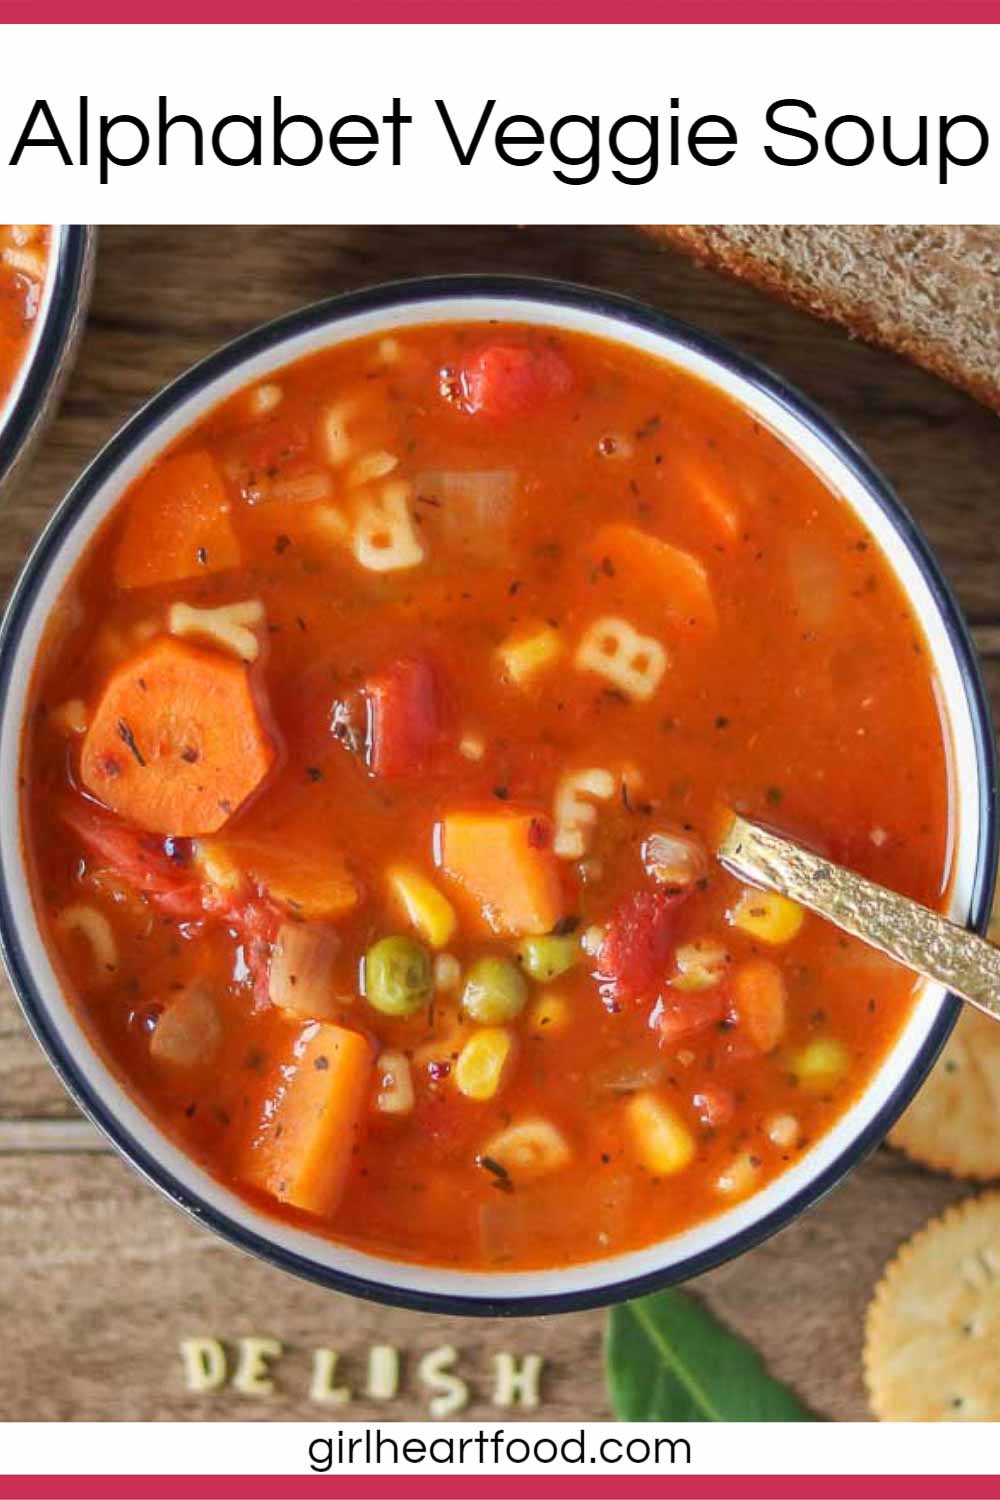 Vegetable Alphabet Soup Recipe | Girl Heart Food®